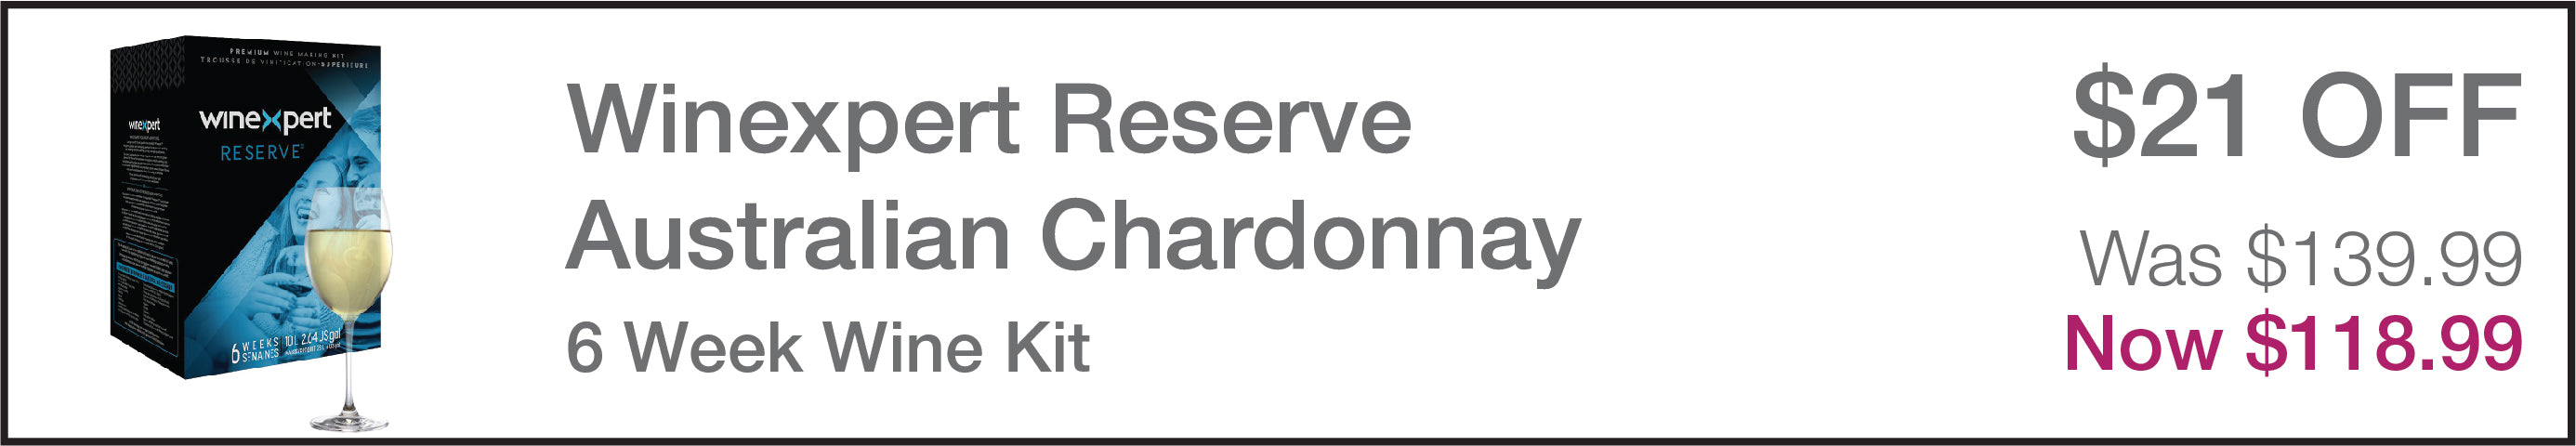 Winexpert Reserve Chardonnay